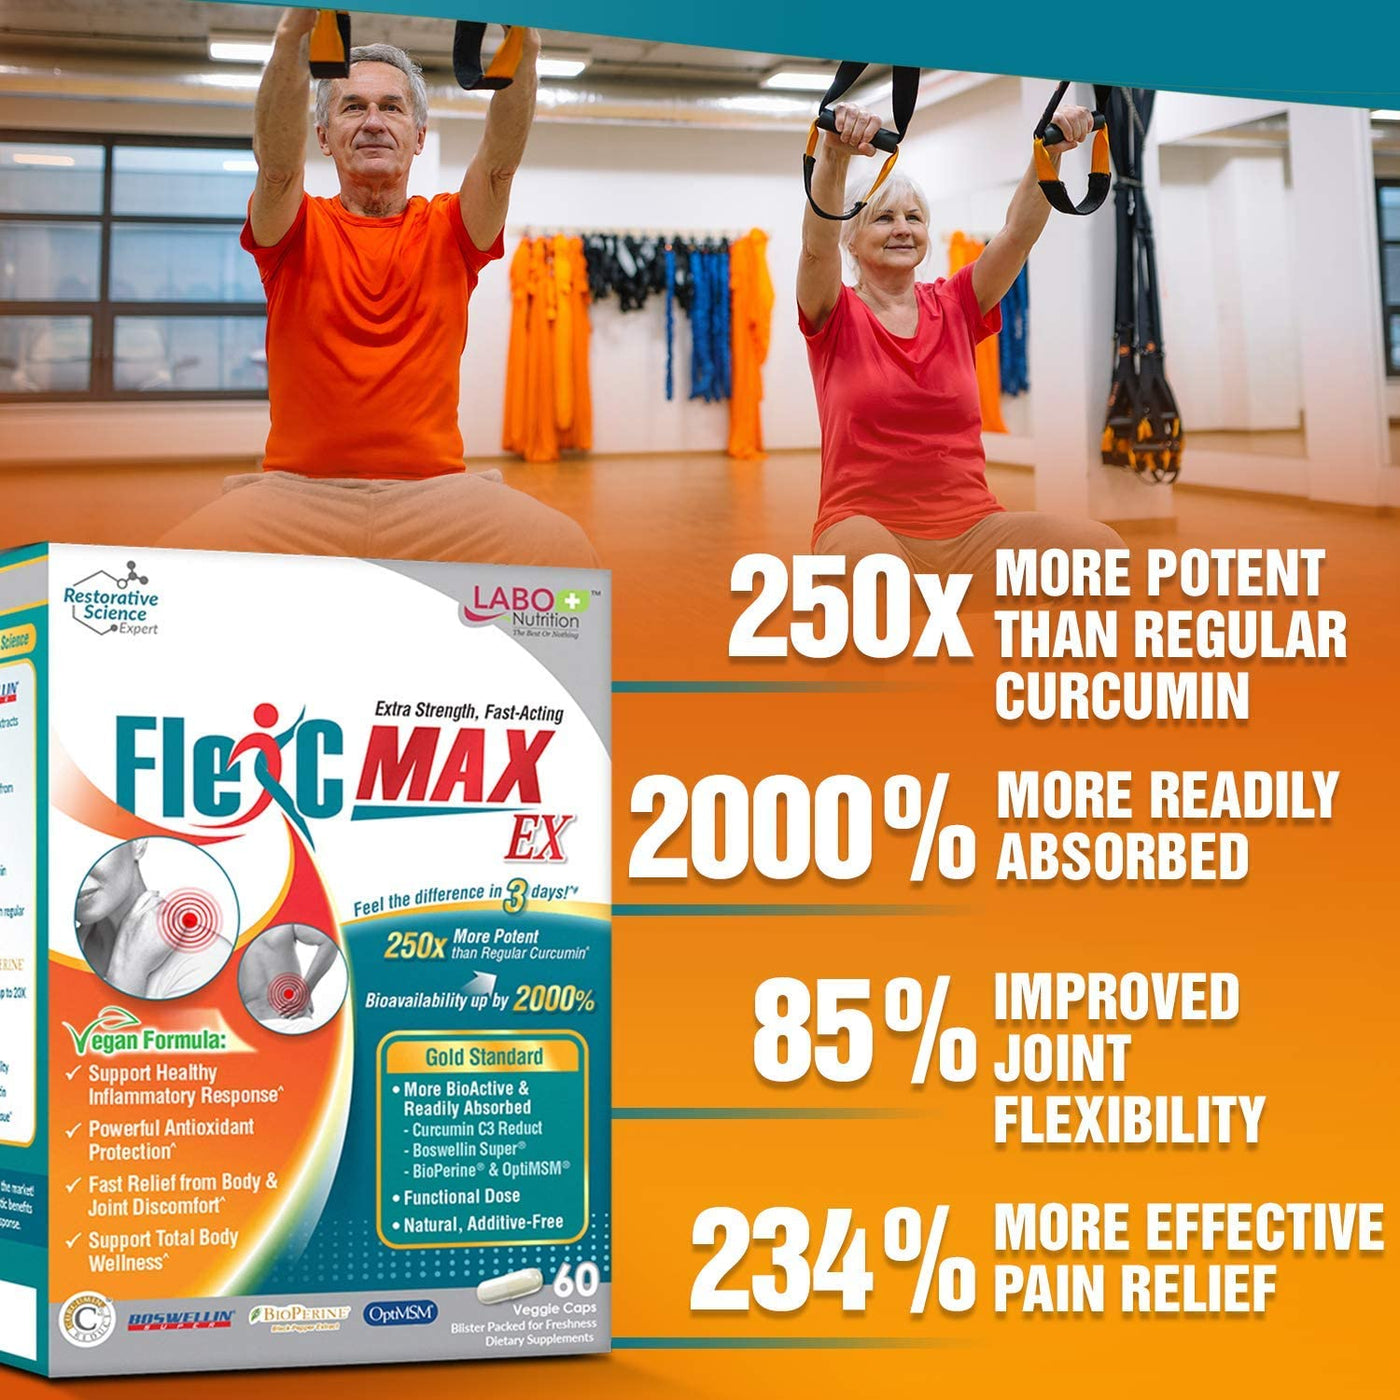 LABO Nutrition FlexC MAX EX with Turmeric Curcumin C3 Reduct 95% Tetrahydrocurcuminoids, Bioperine, Boswellia Extract & OptiMSM, Effective Anti-Inflammatory & Antioxidation, Joint & Body Pain Relief - Lifestream Group US